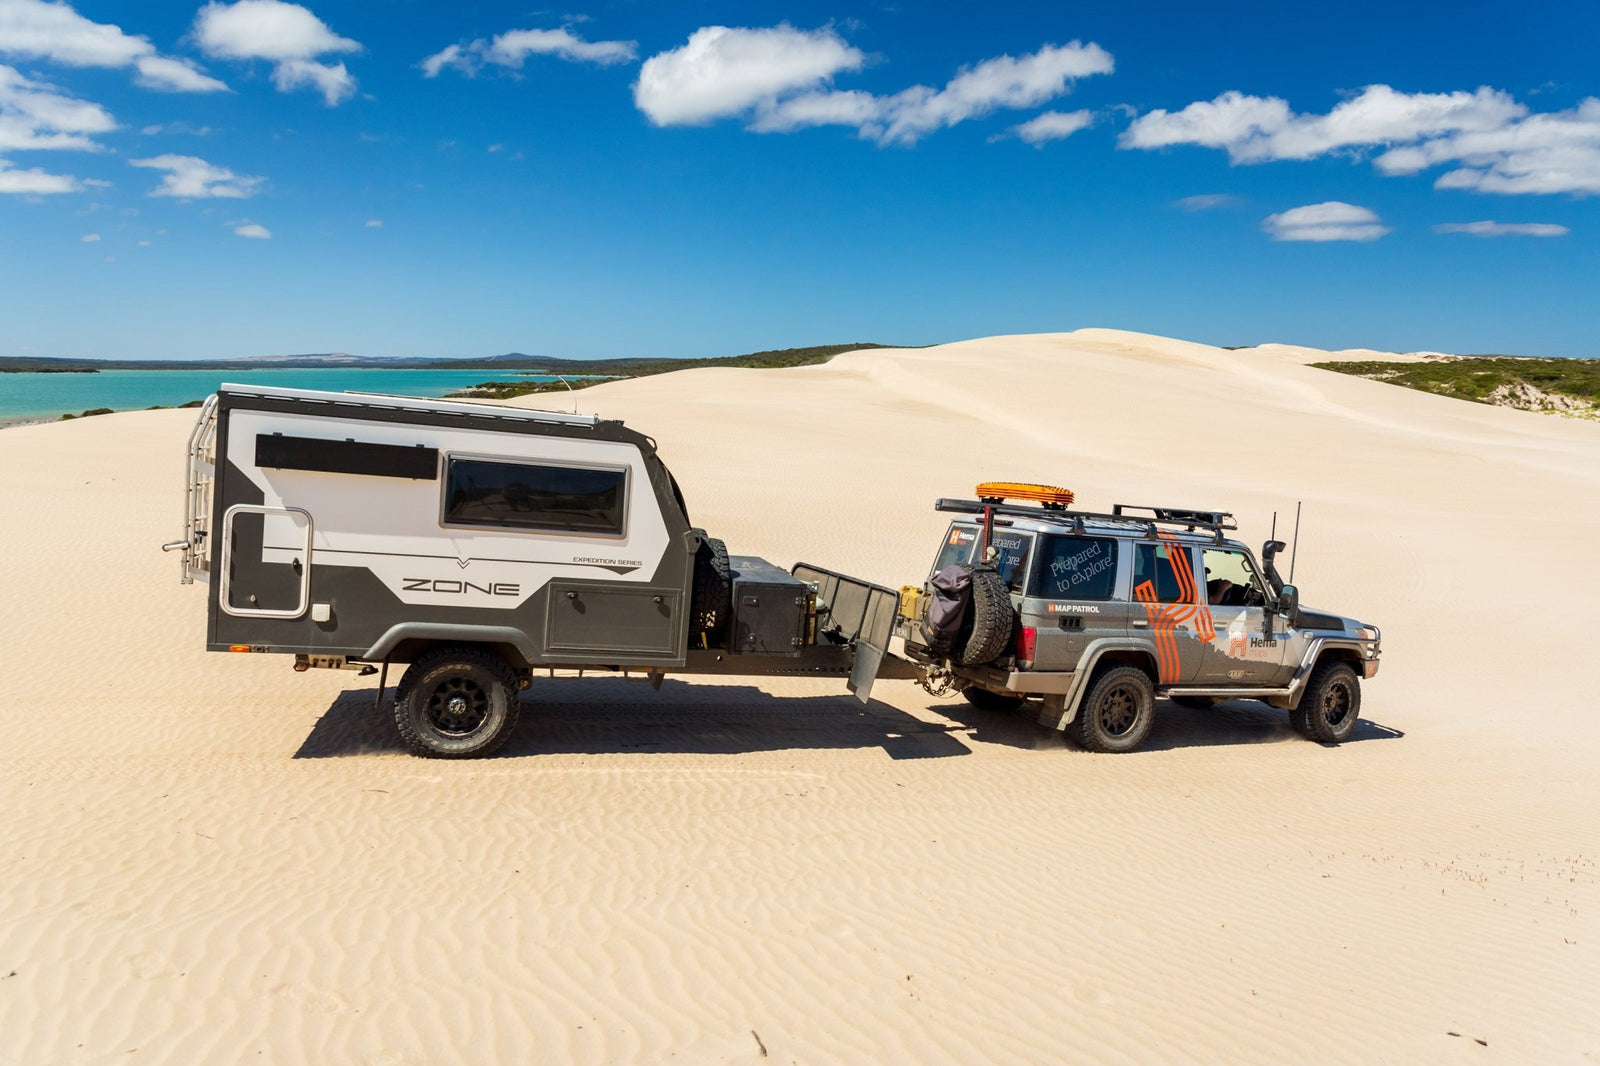 Zone RV Expedition Series Z-10.0 - Caravan World Australia